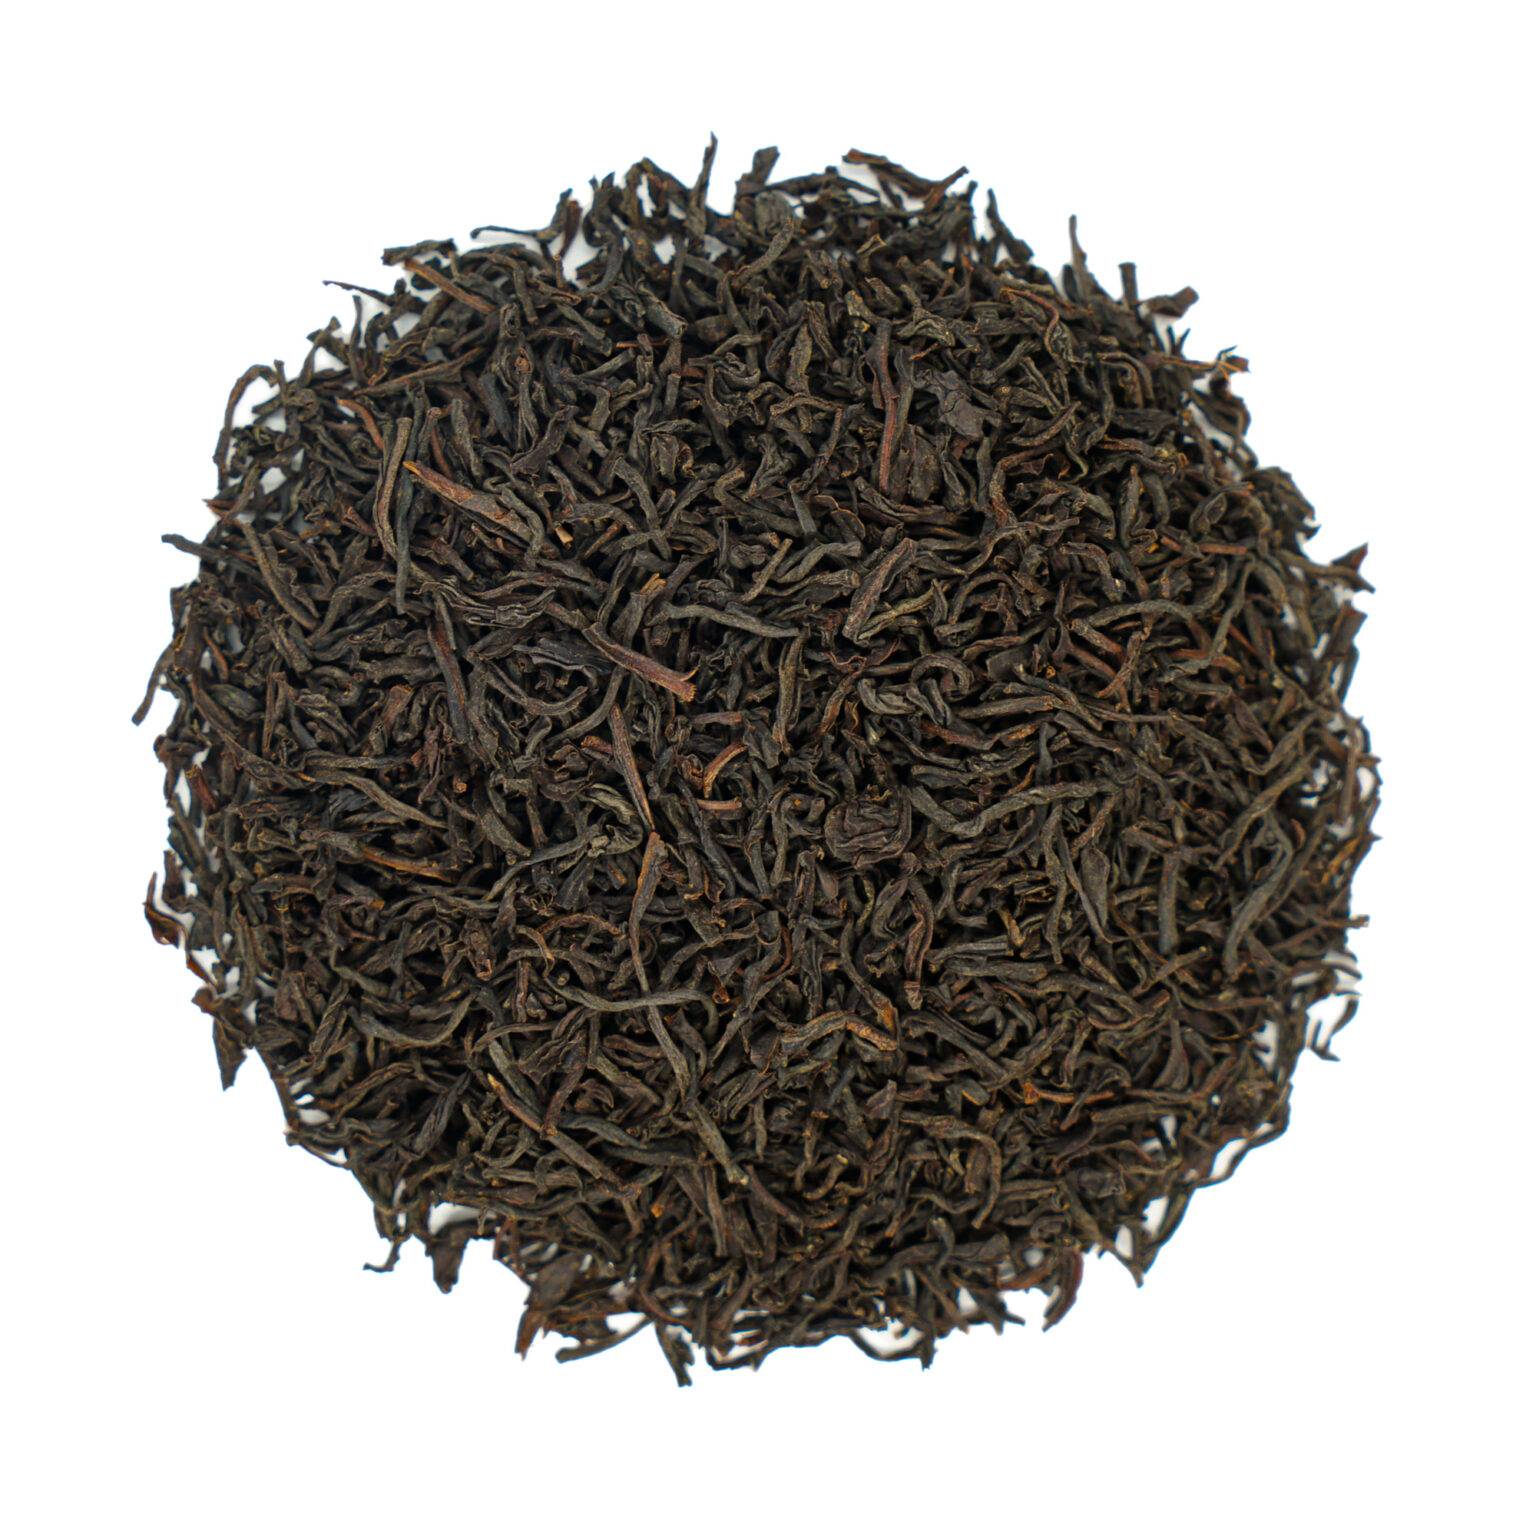 Herbata Ceylon Uva Highlands - Wyjątkowe Smaki Czekają!